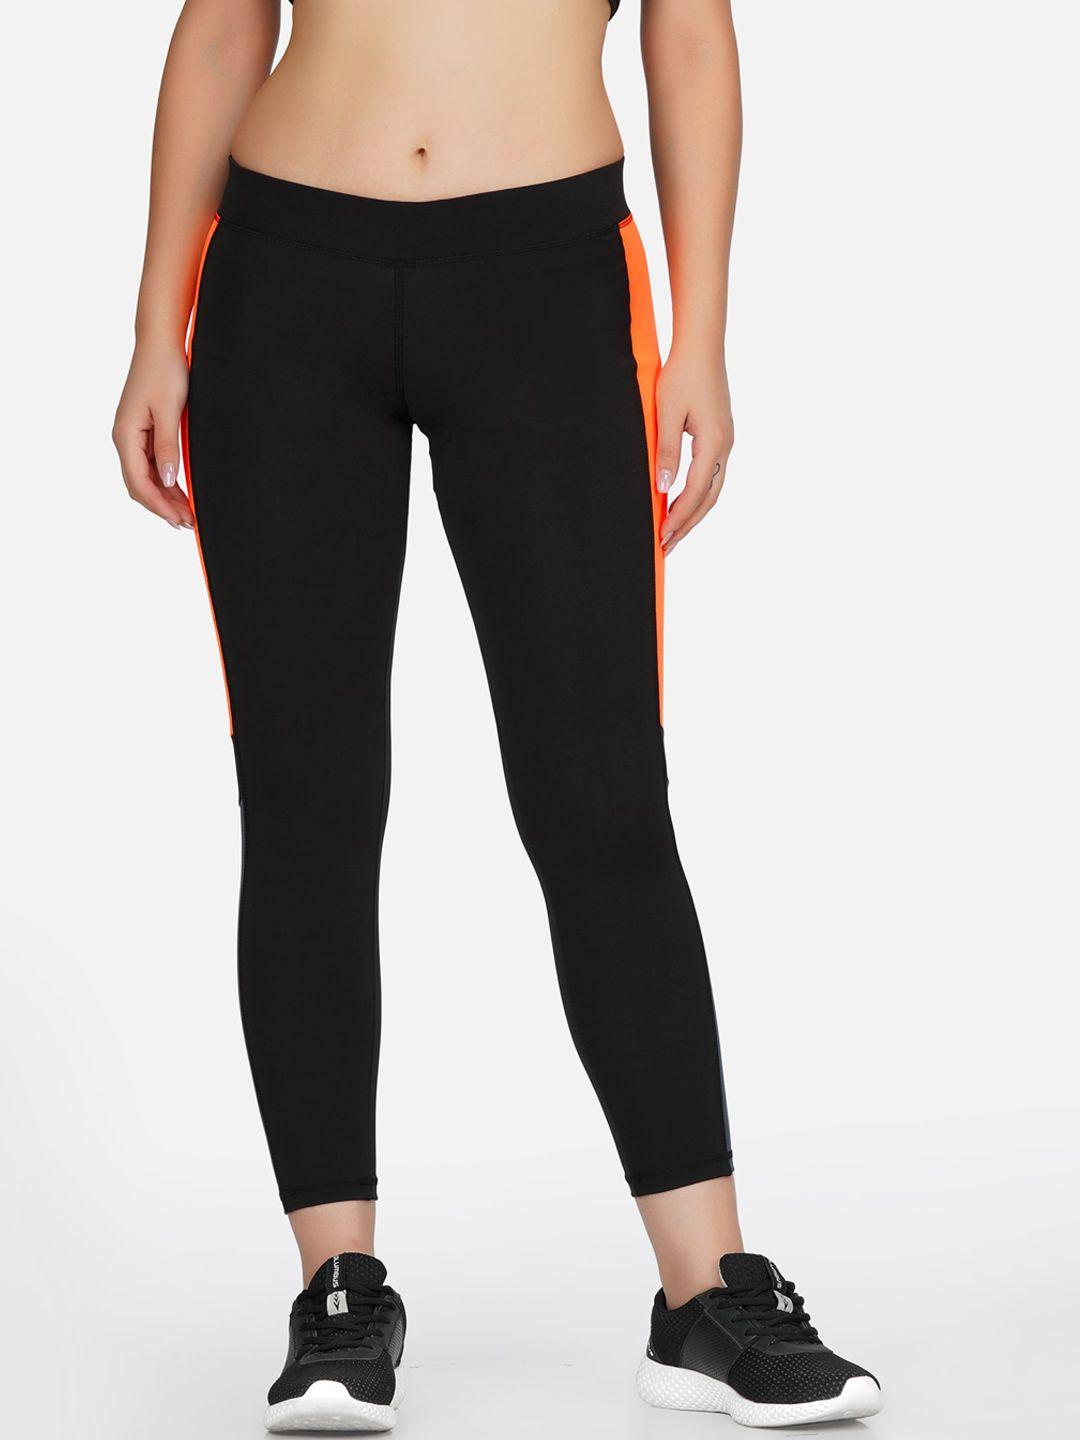 neu-look-fashion-women-black-&-orange-colourblocked-gym-tights